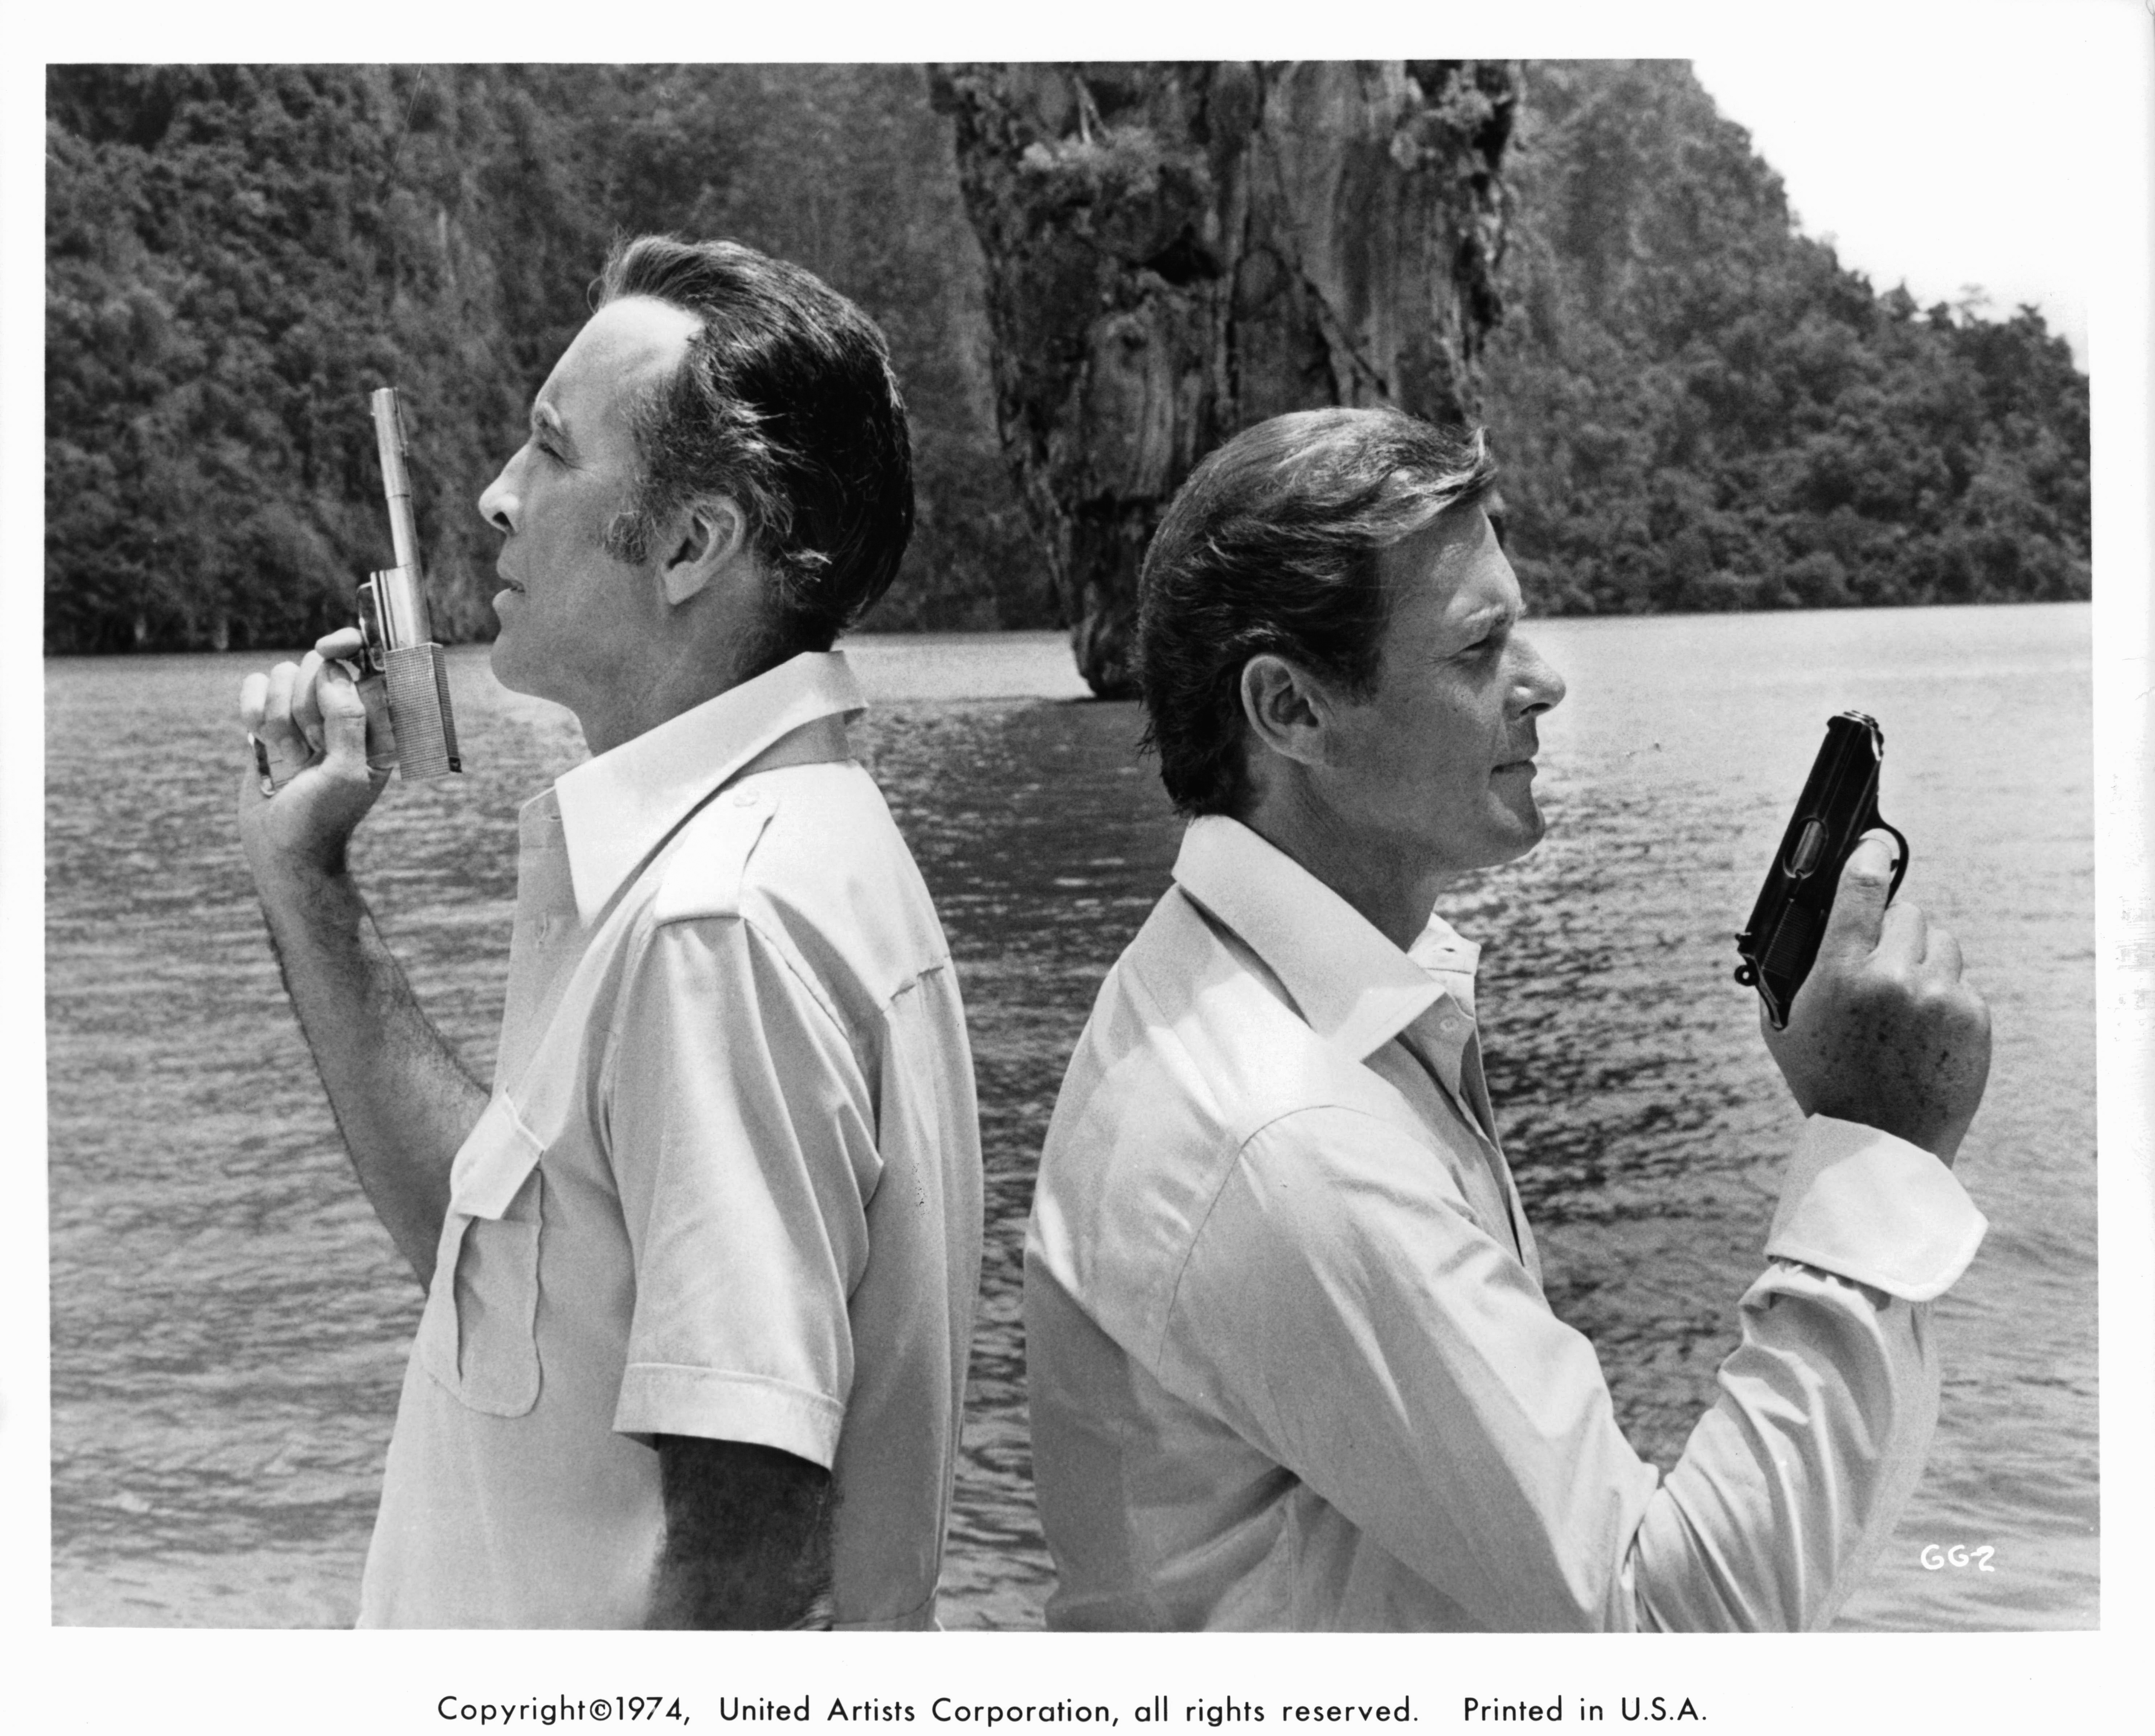 The Spy Who Loved Me: A Roger Moore as James Bond retrospective